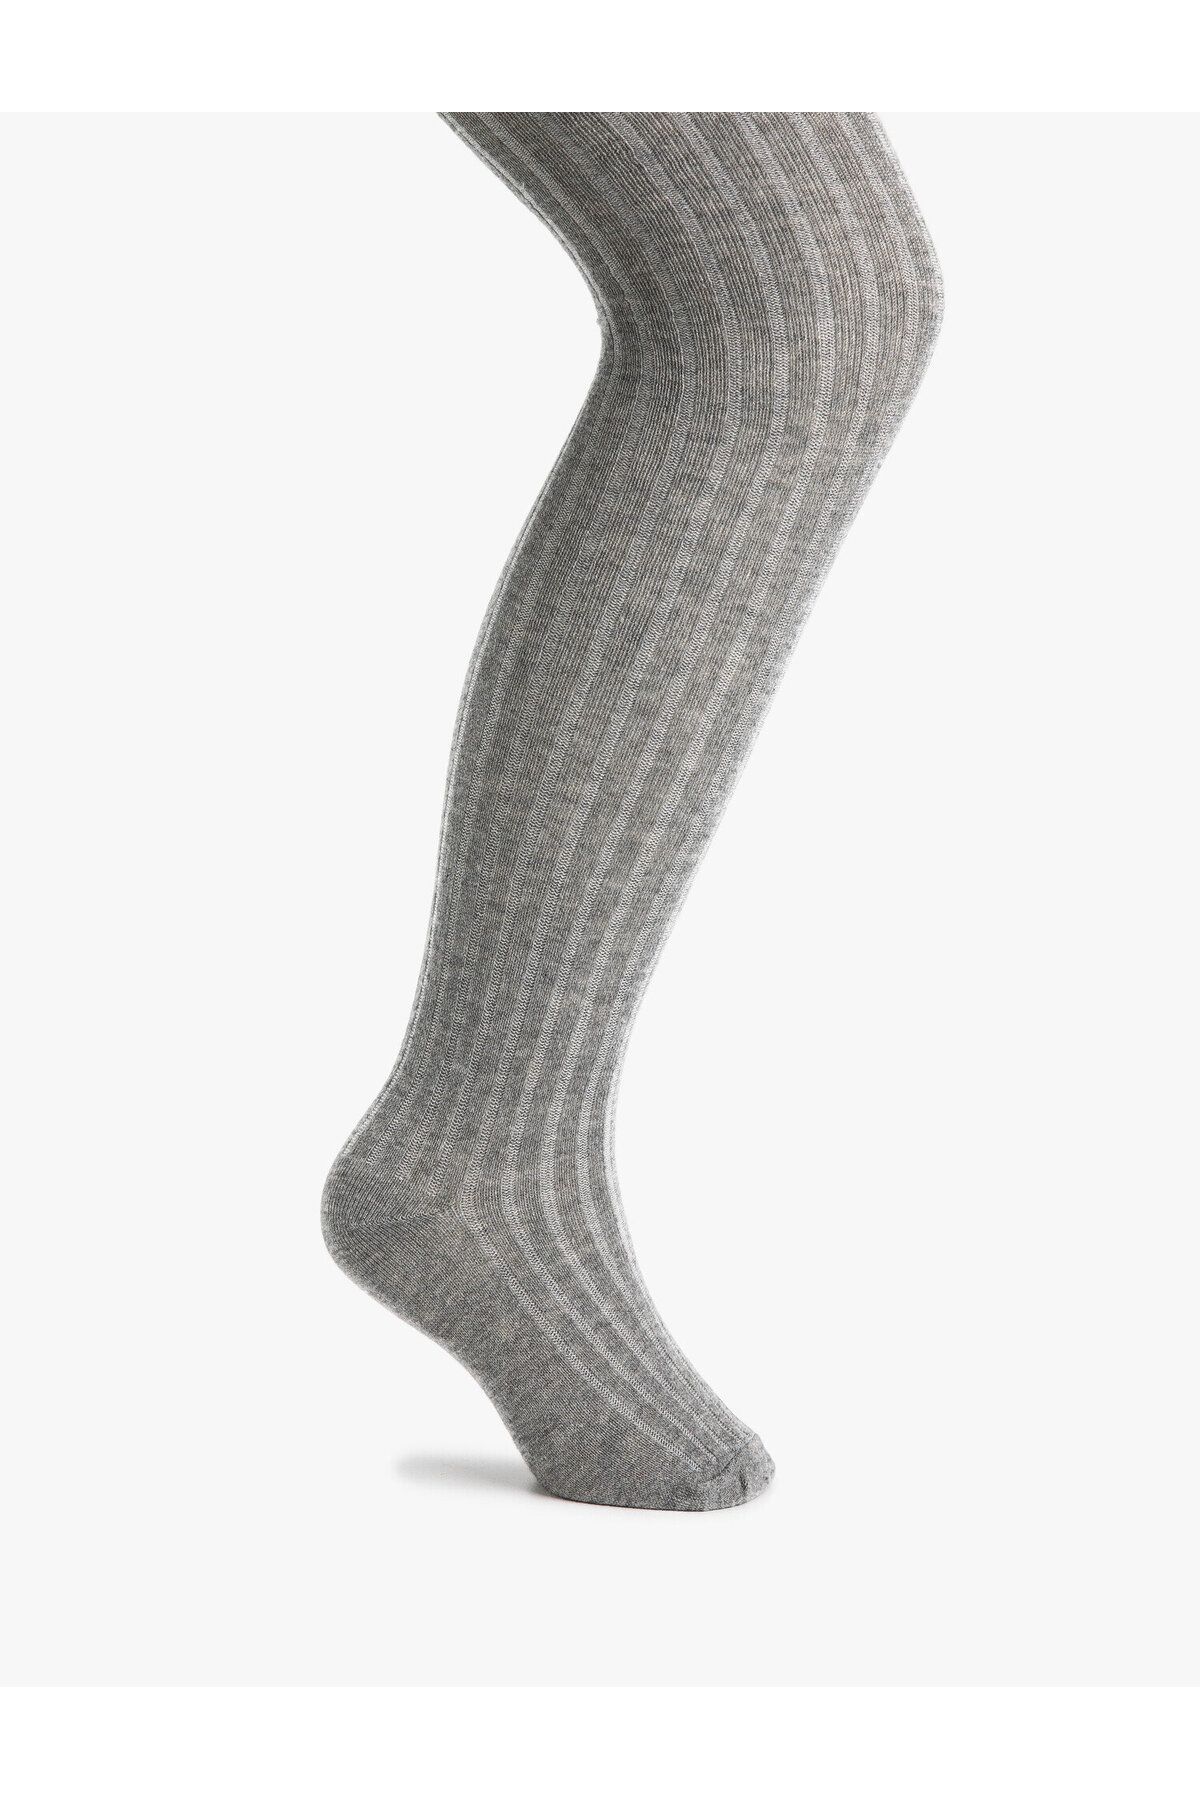 Koton Külotlu Çorap